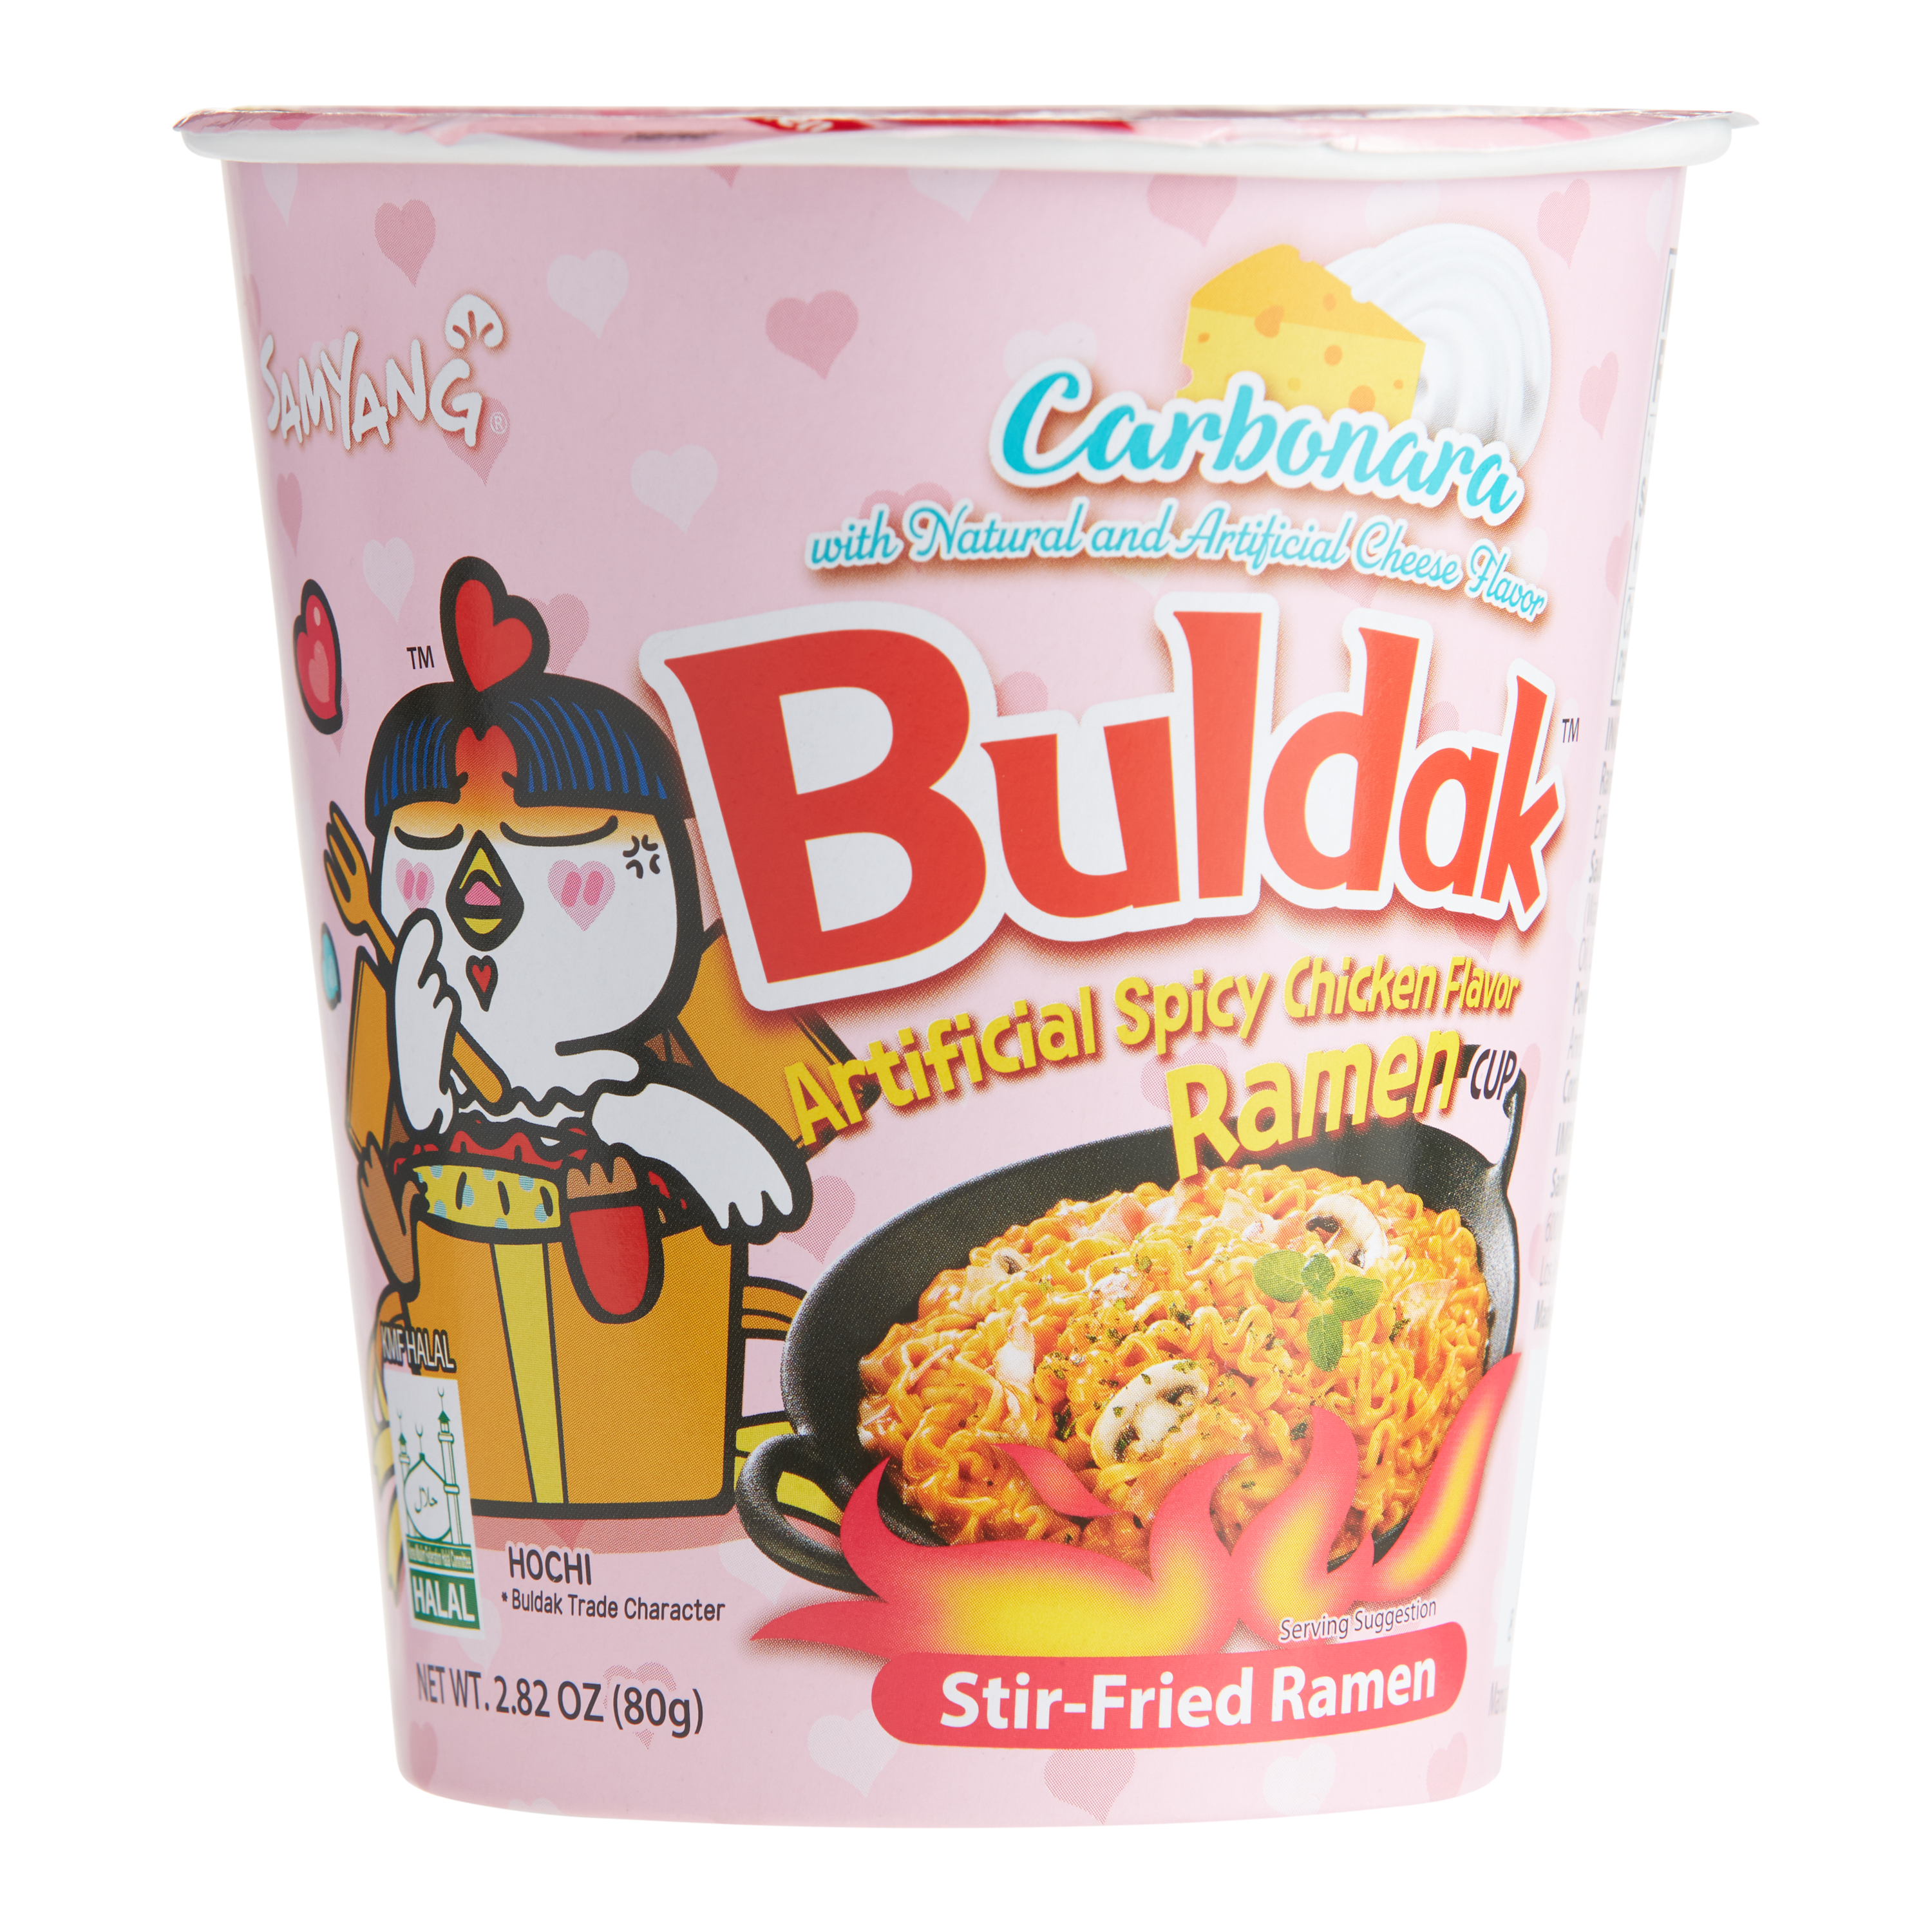 Pack of 6 Samyang Buldak Carbonara Chicken Roasted Stir Fried Ramen Cup  Noodles